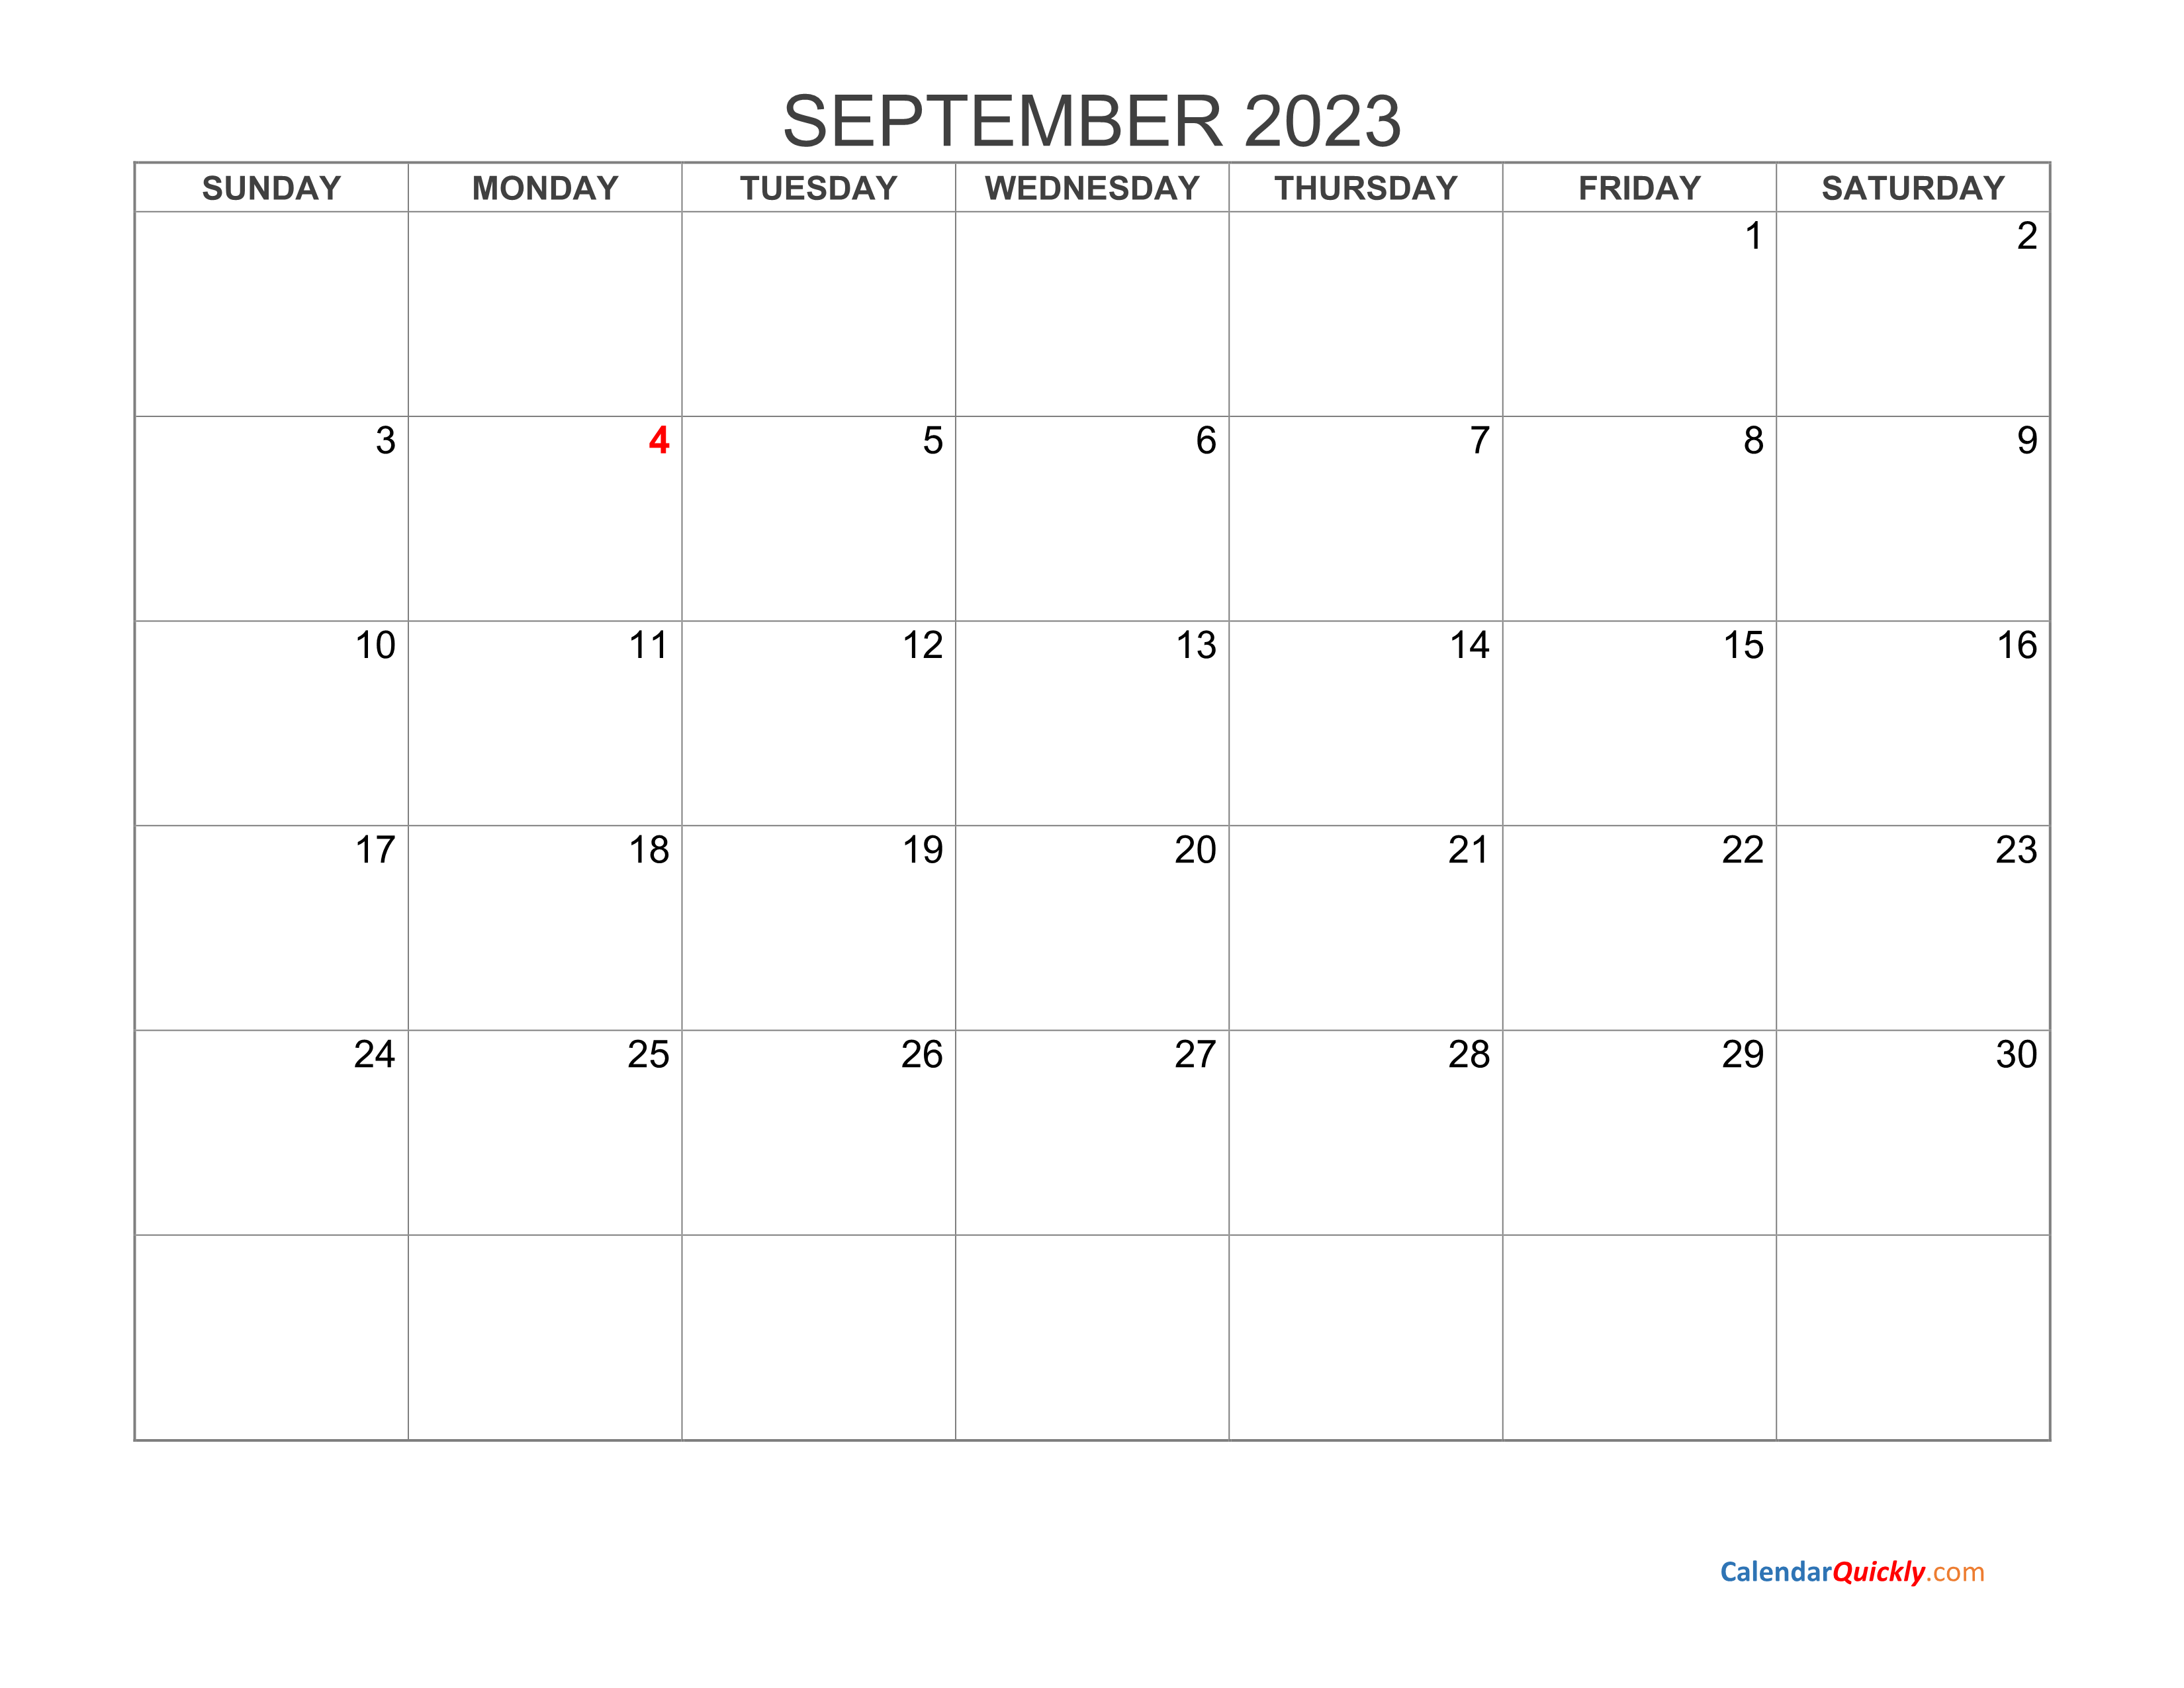 September Calendar 2023 Printable Calendar Quickly Images And Photos 